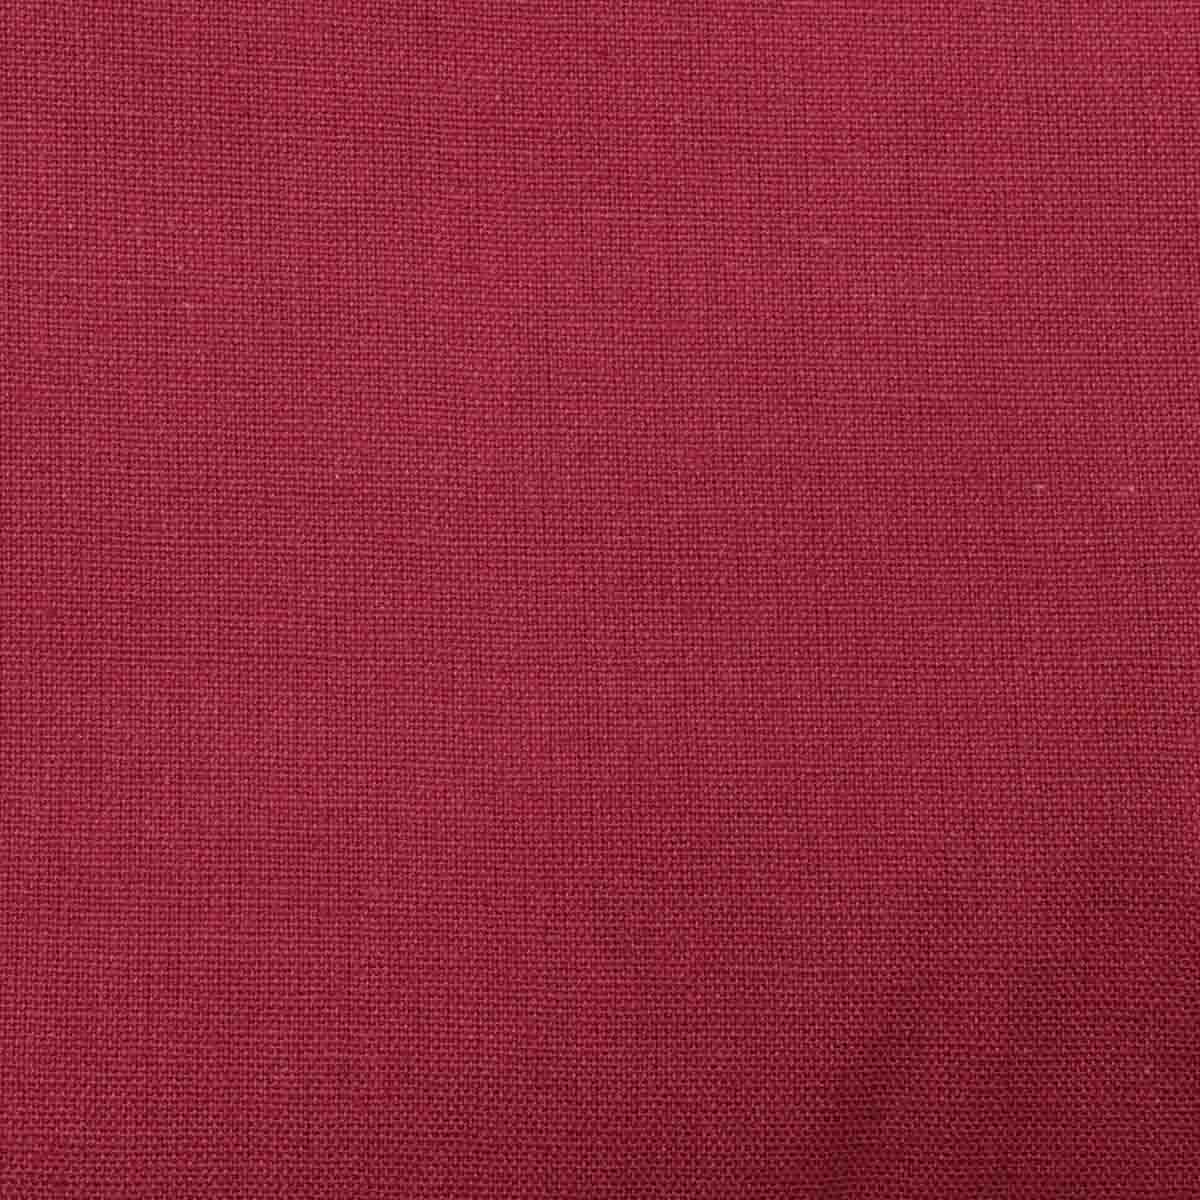 Dhabu Plain Cotton Dark Red (2)